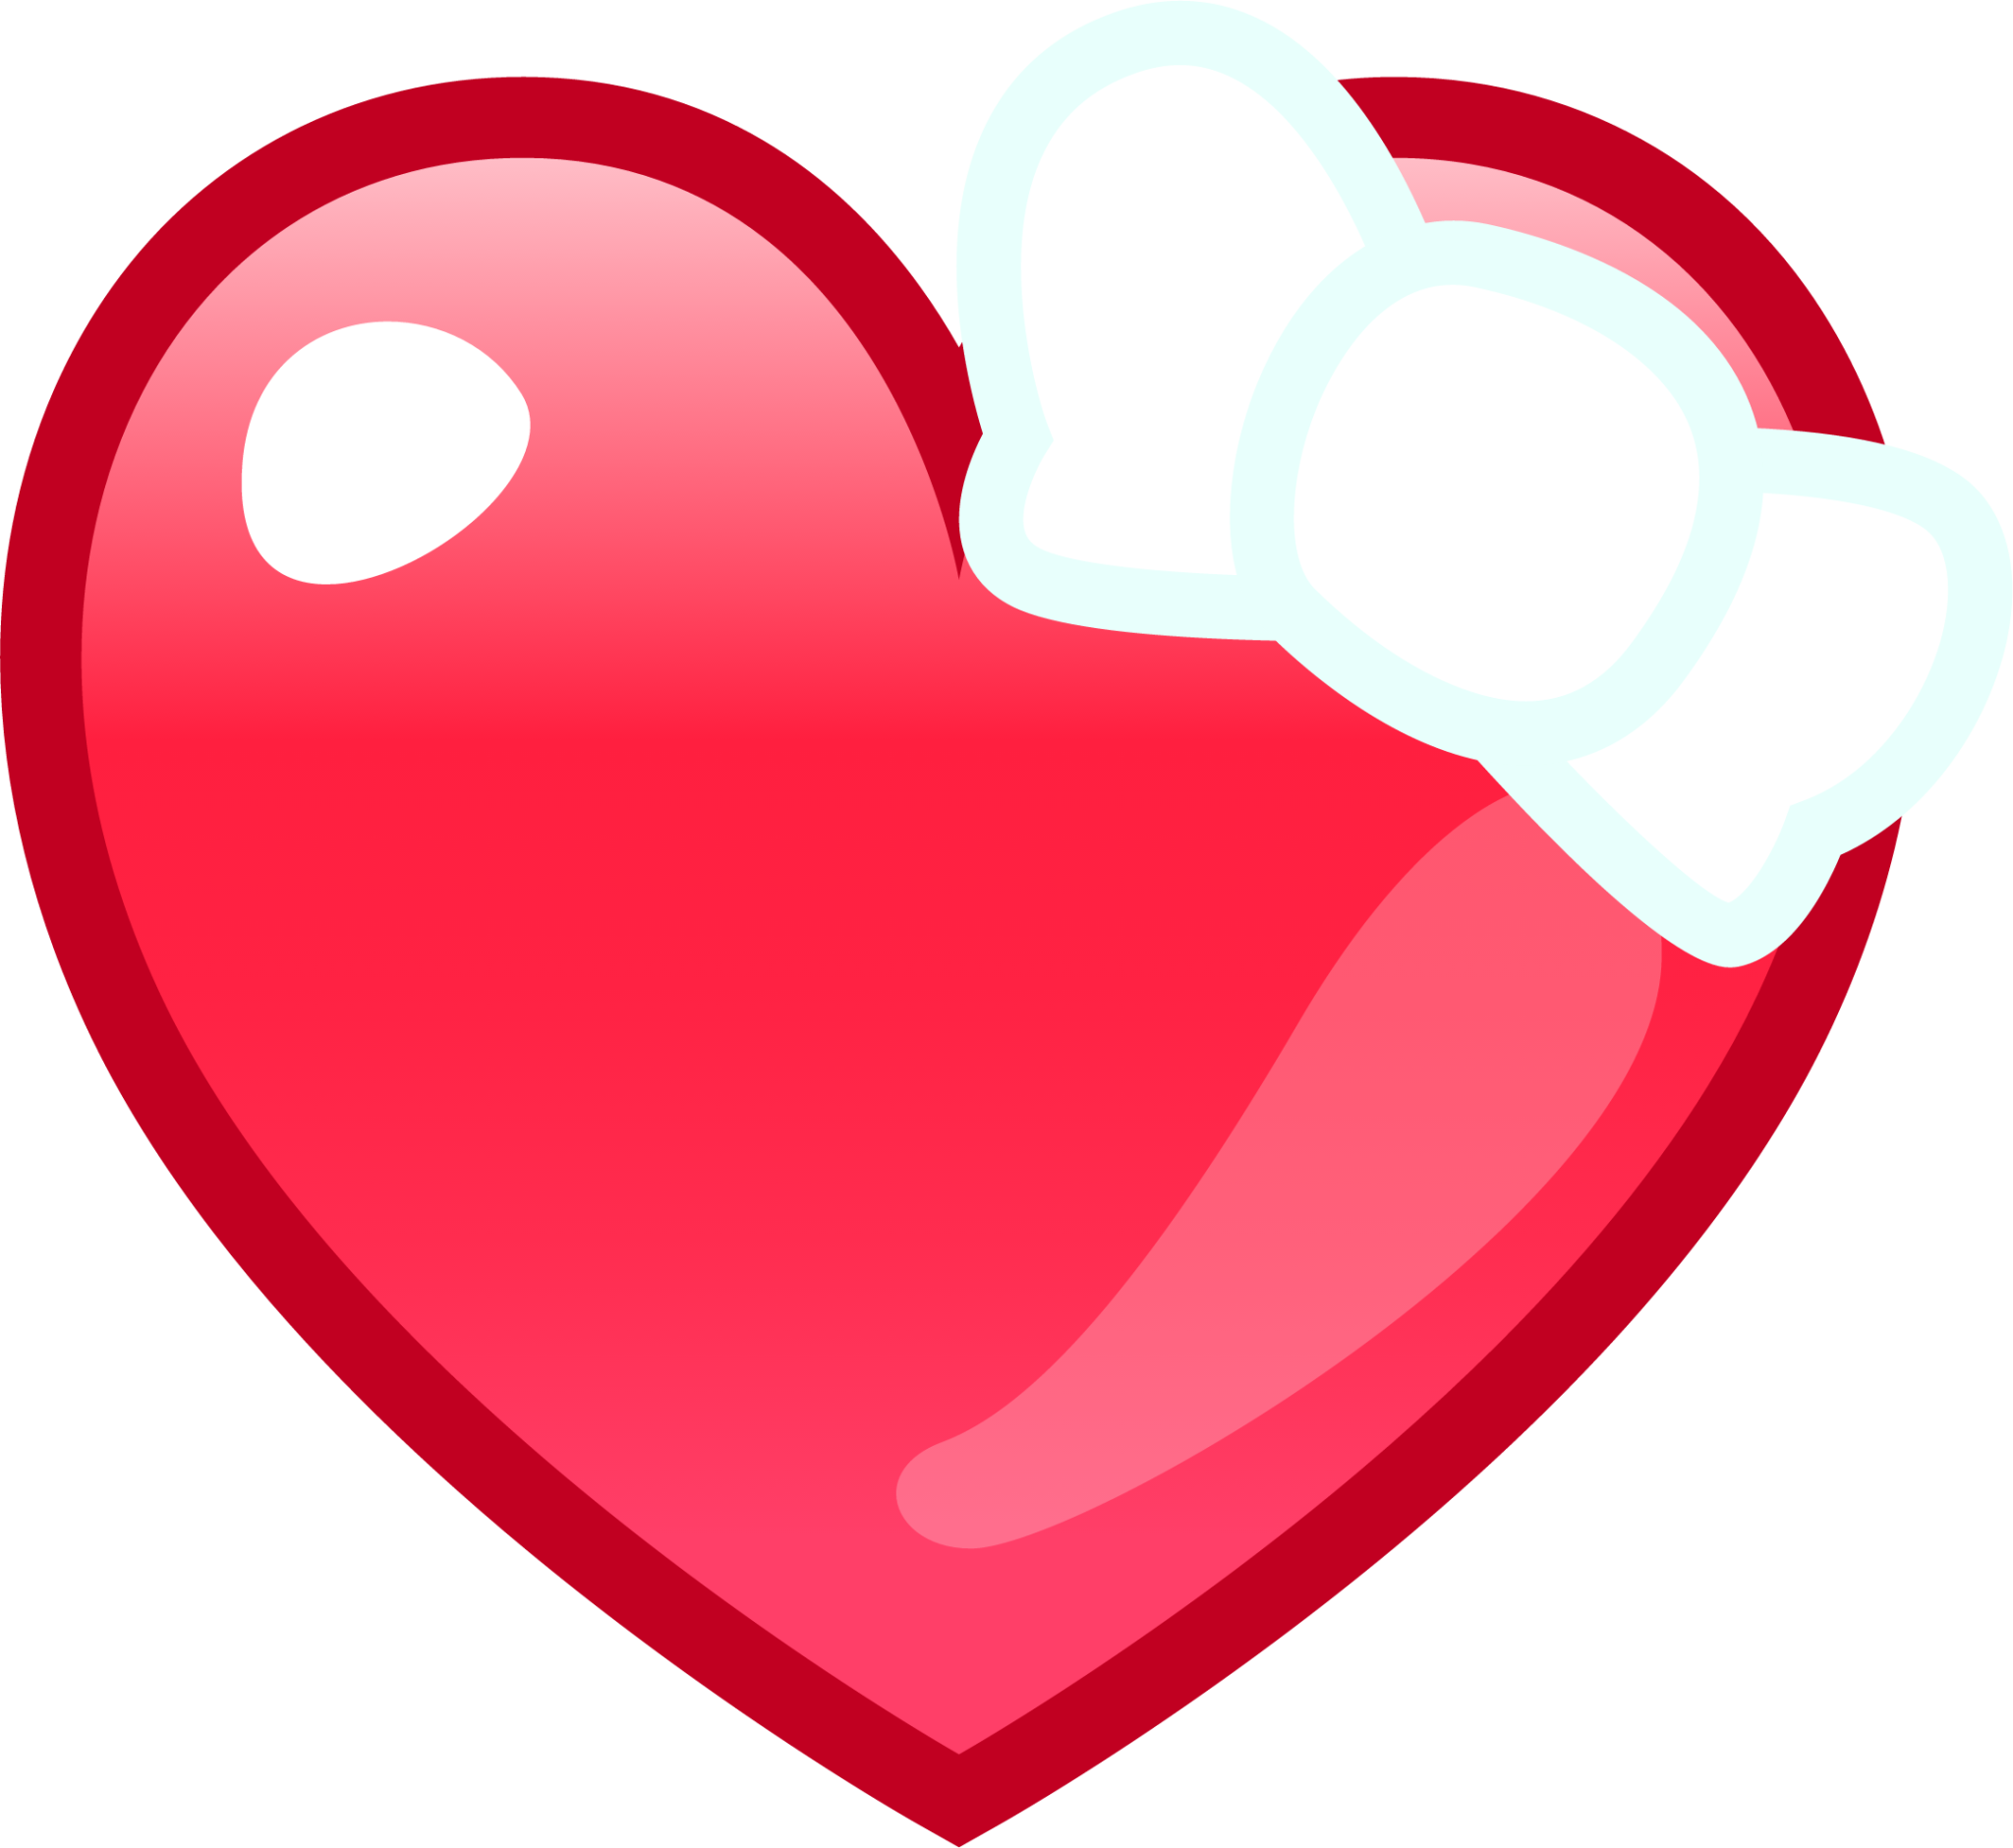 gift heart emoji